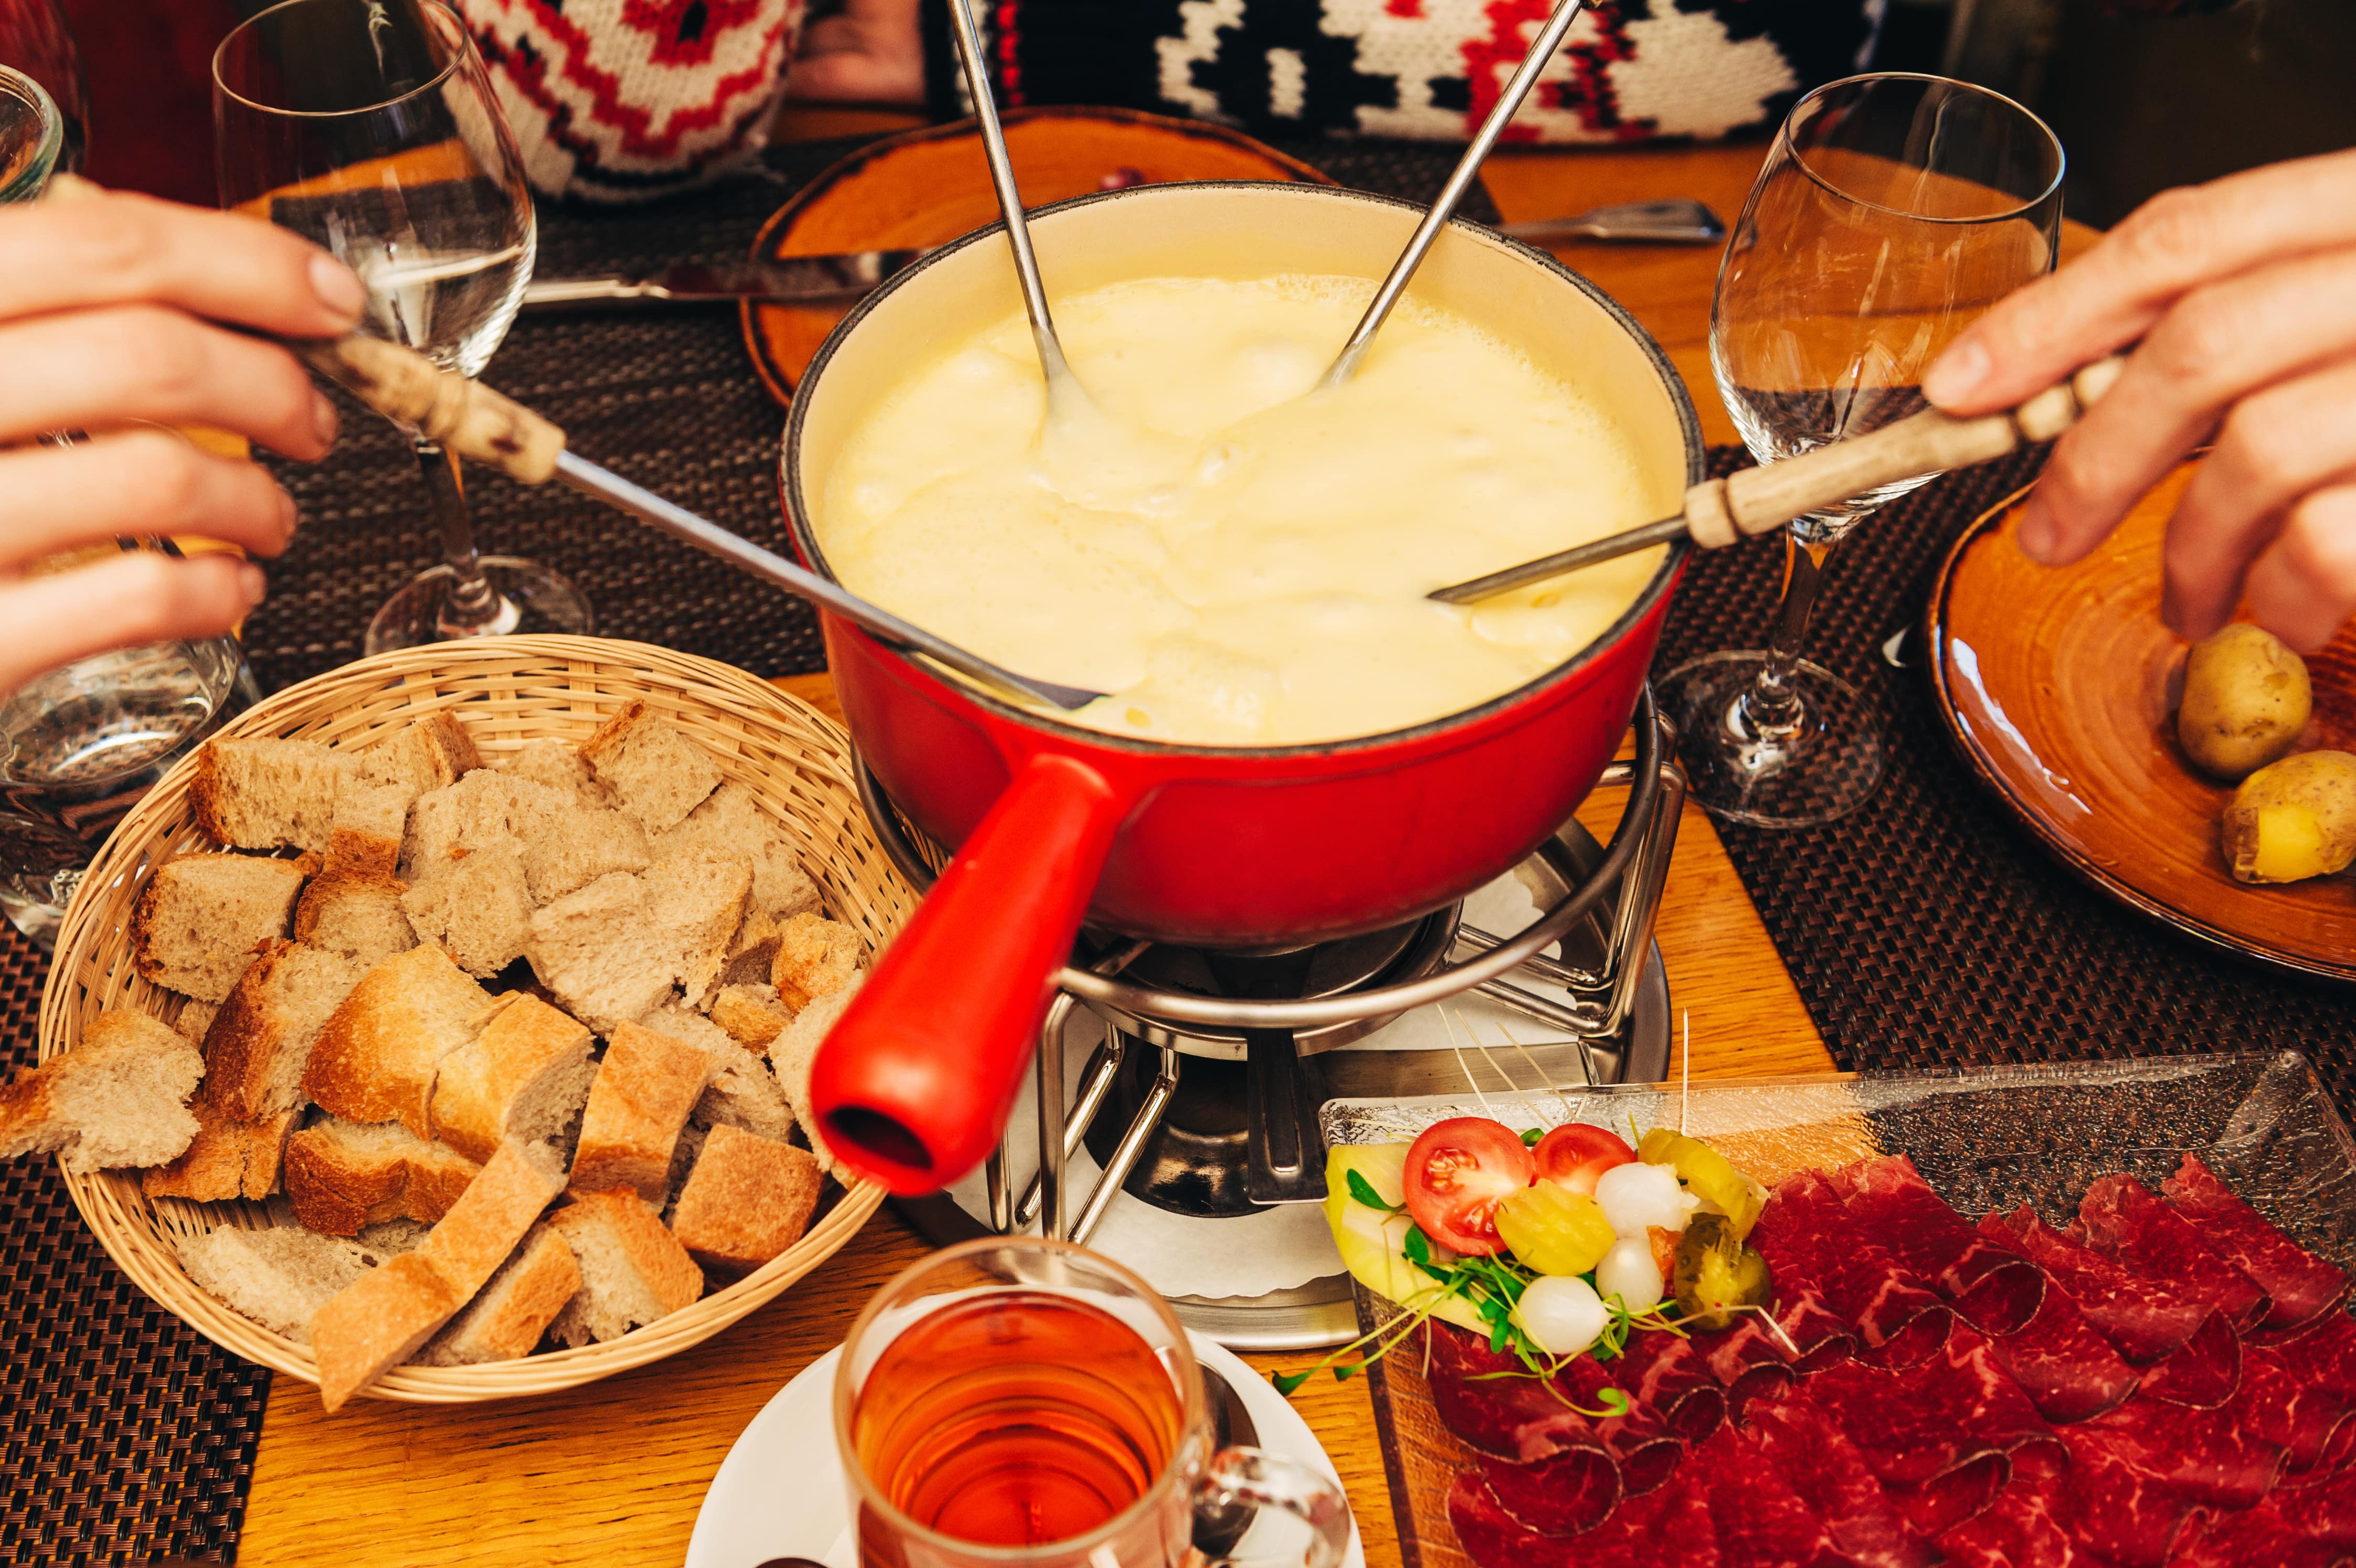 tgv lyria swiss gastronomy fondue